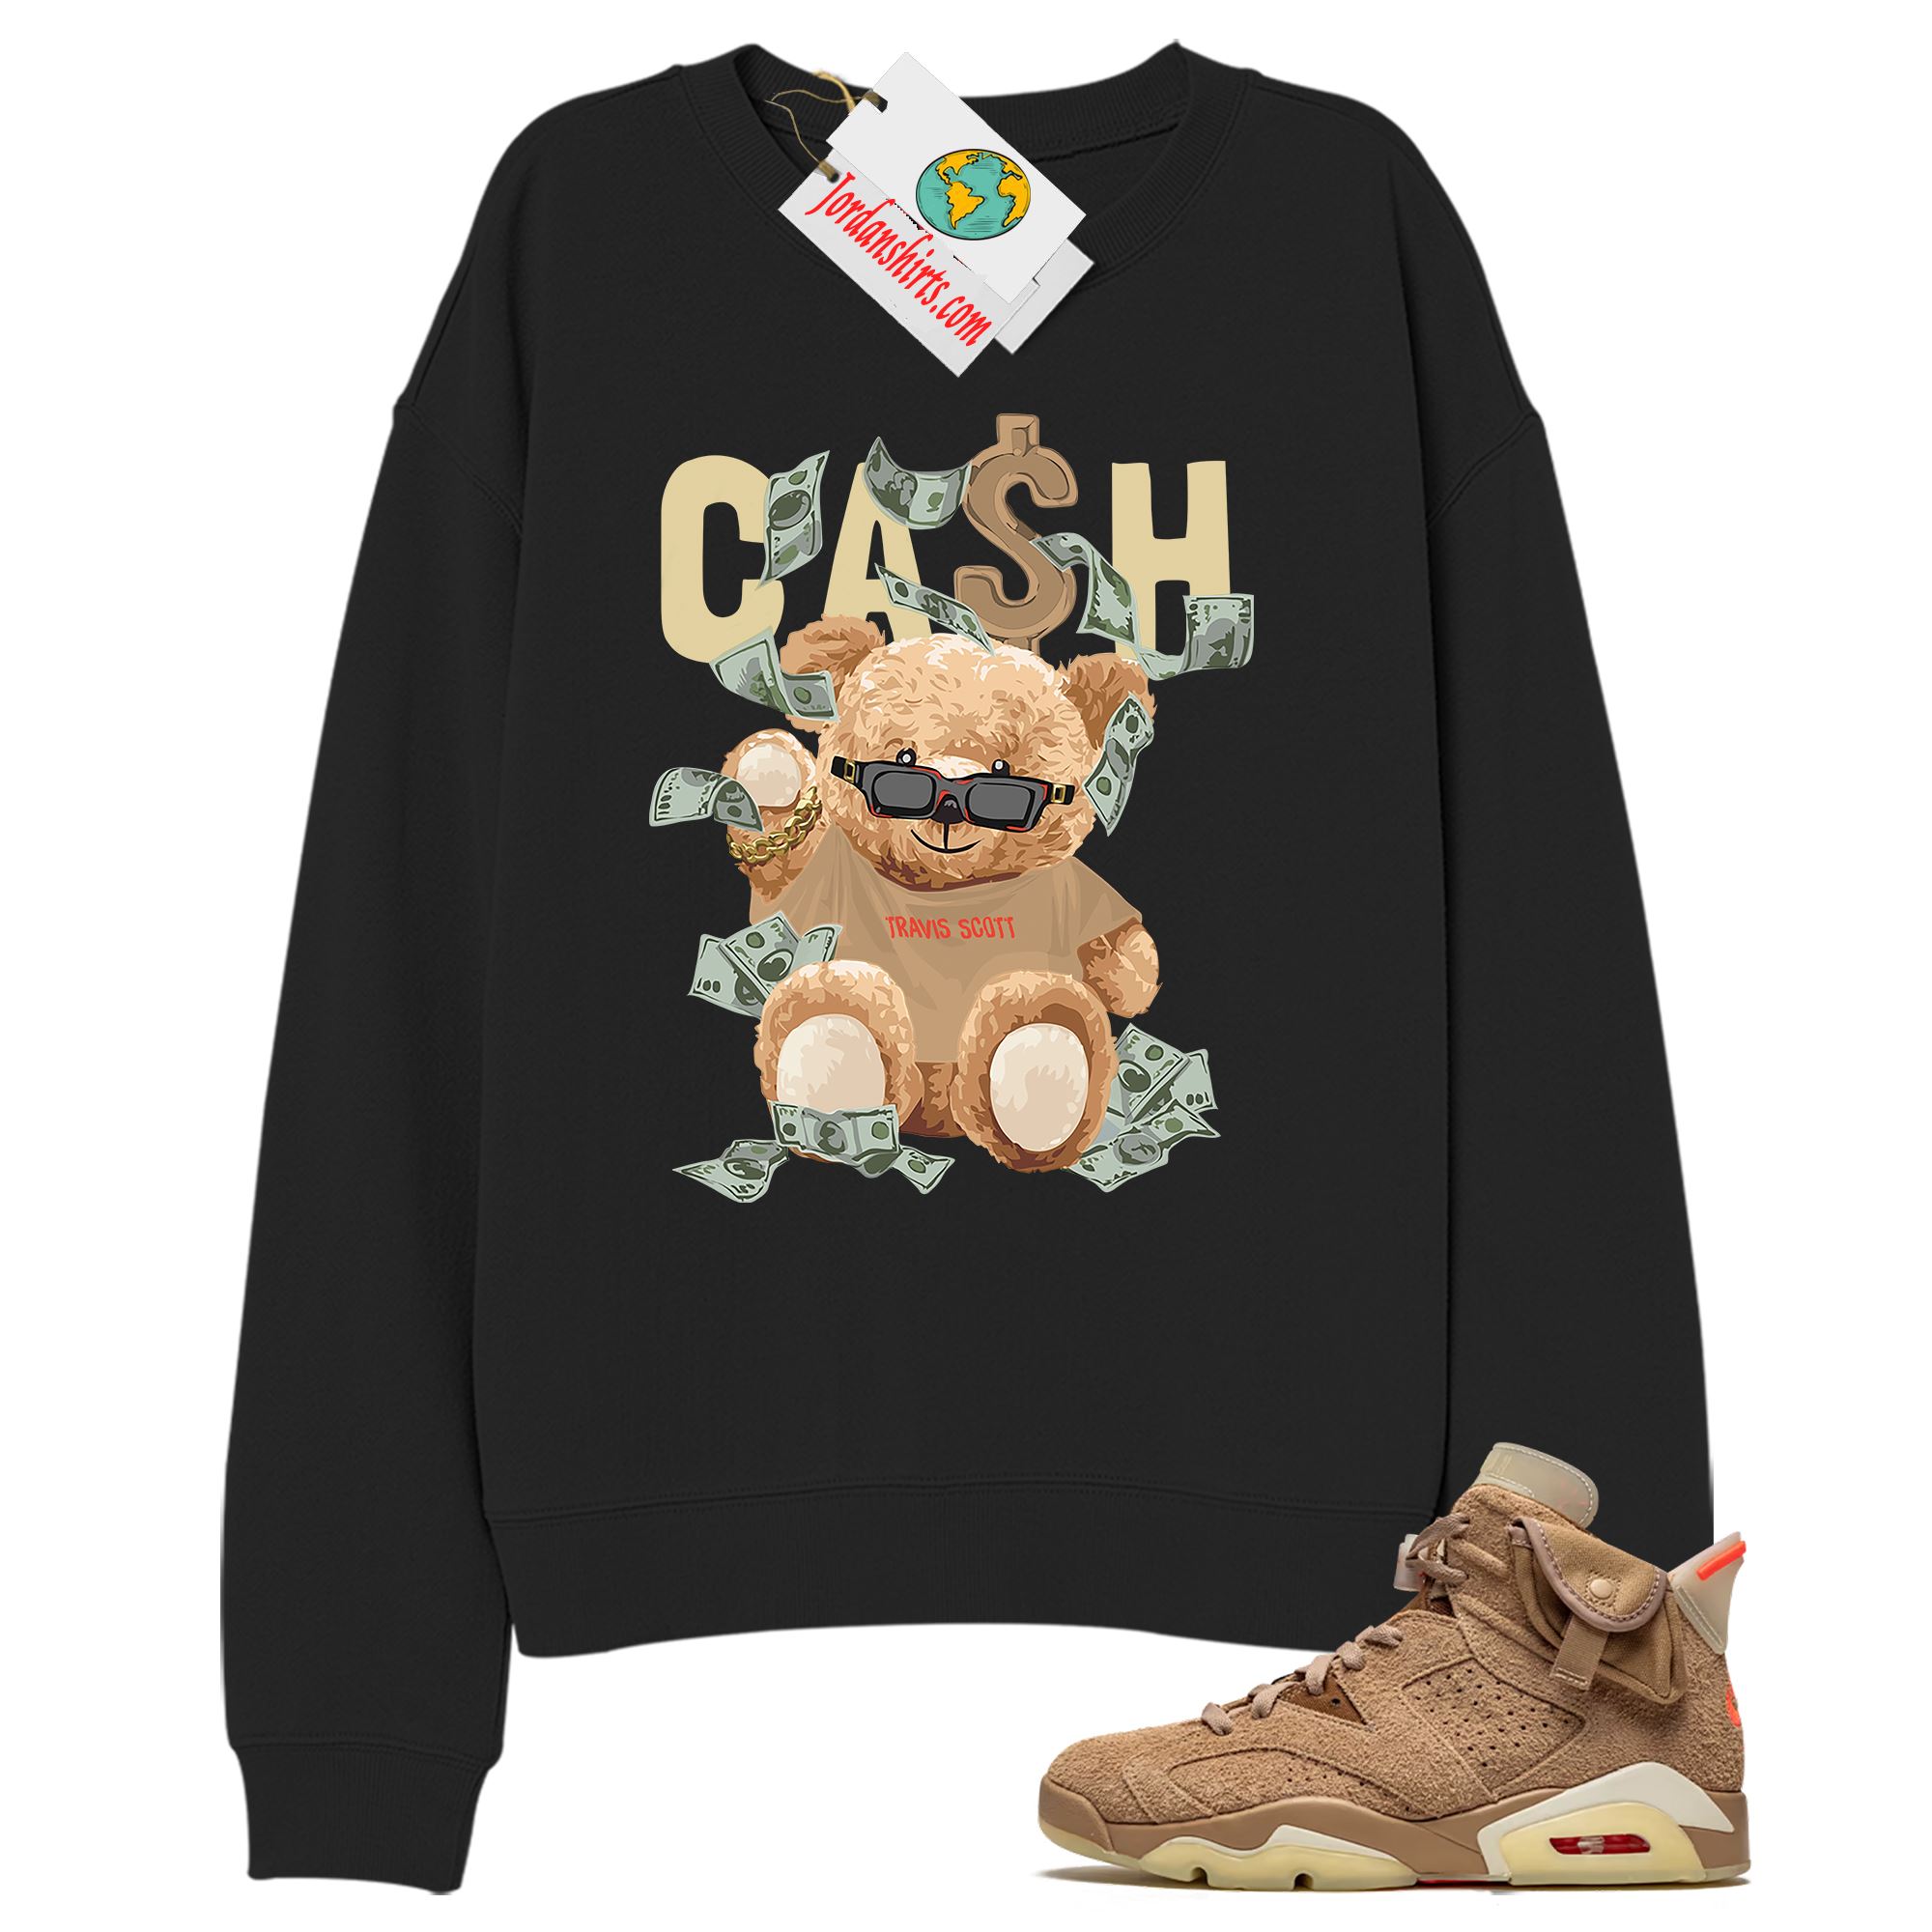 Jordan 6 Sweatshirt, Cash Teddy Bear In Sunglasses Black Sweatshirt Air Jordan 6 Travis Scott 6s Size Up To 5xl